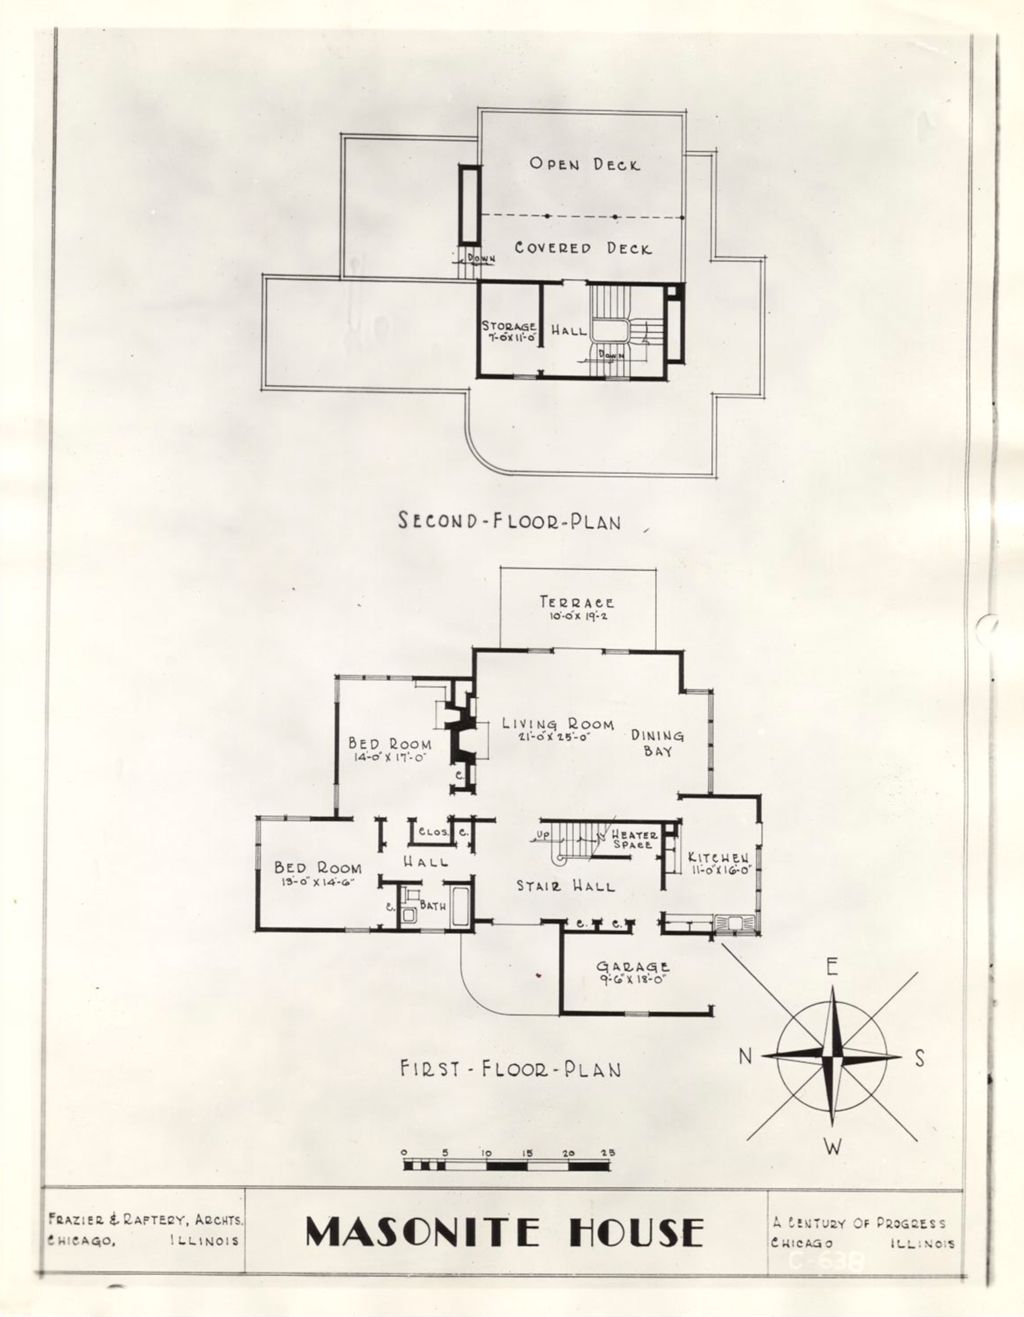 Miniature of Floor plan for the Masonite House exhibit